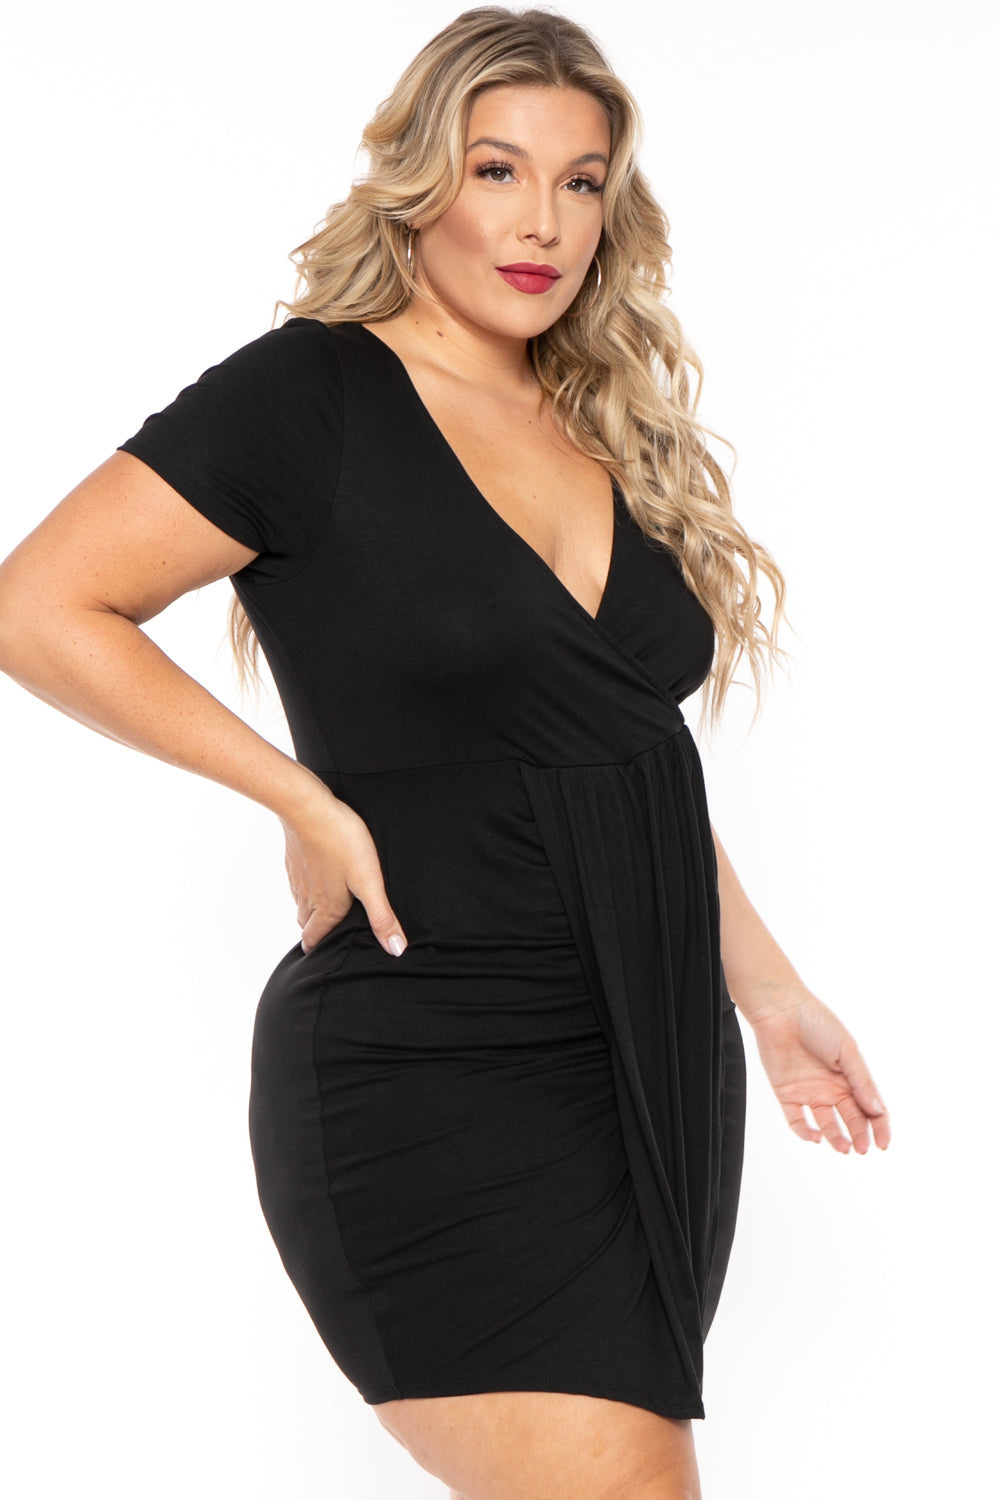 Curvy Sense Dresses Plus Size Evie Front Drape Dress - Black